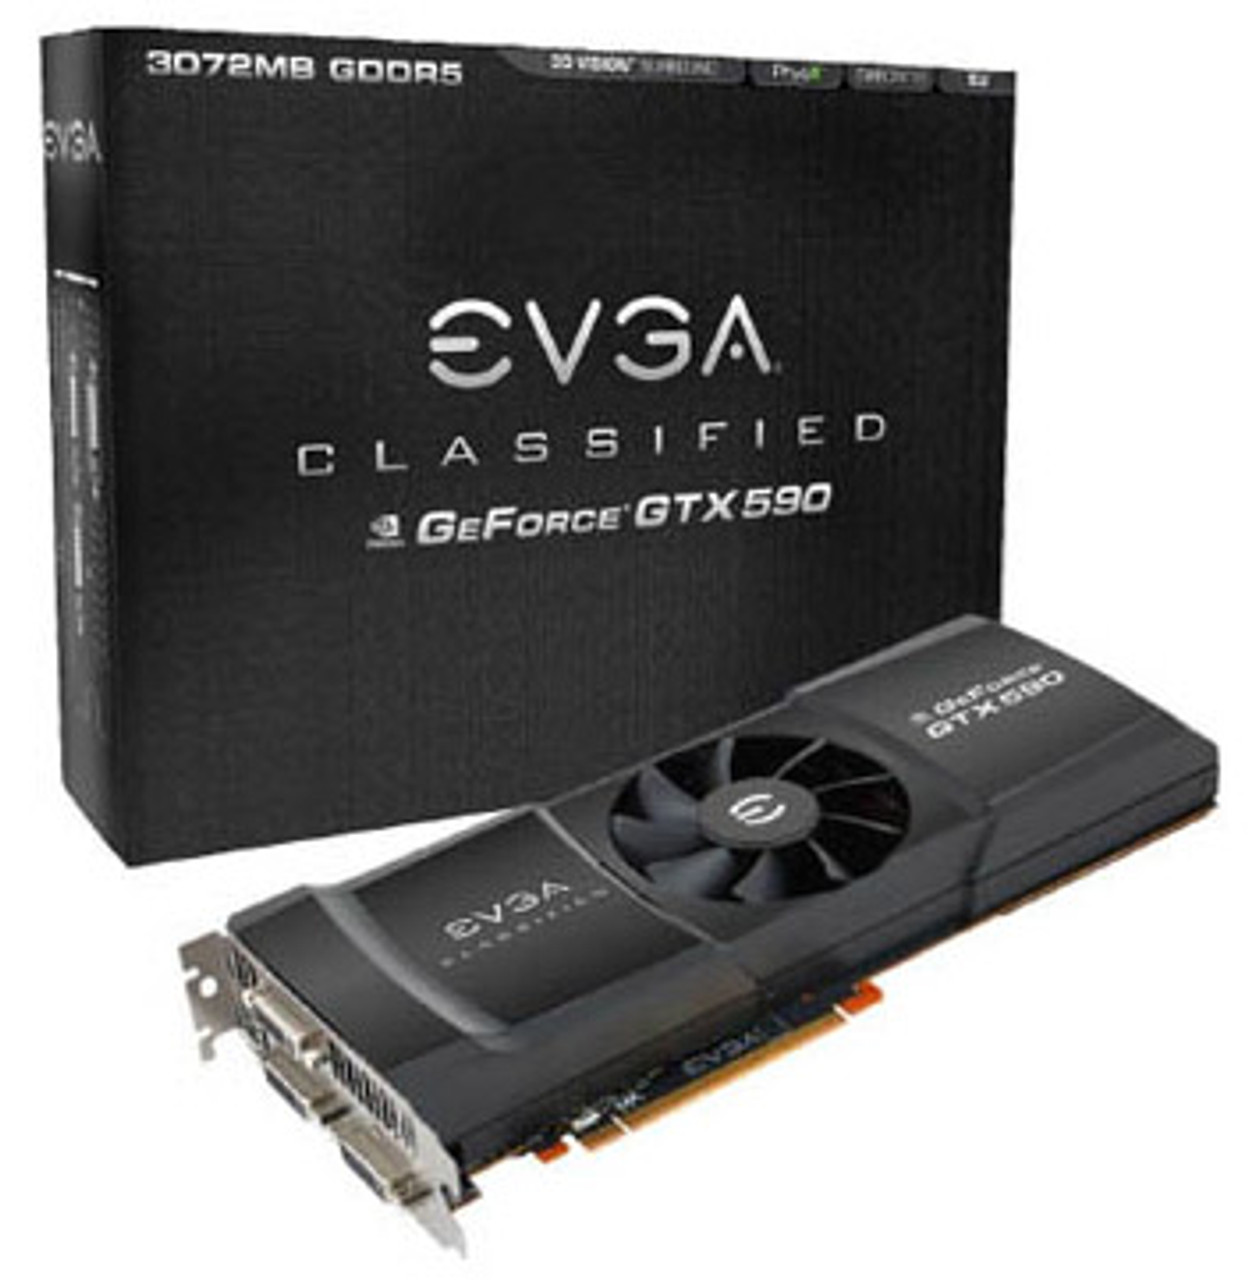 015-P3-1583-AR - EVGA GeForce GTX 580 1536MB PCI Express 2.0 Dual DVI Video Graphics Card